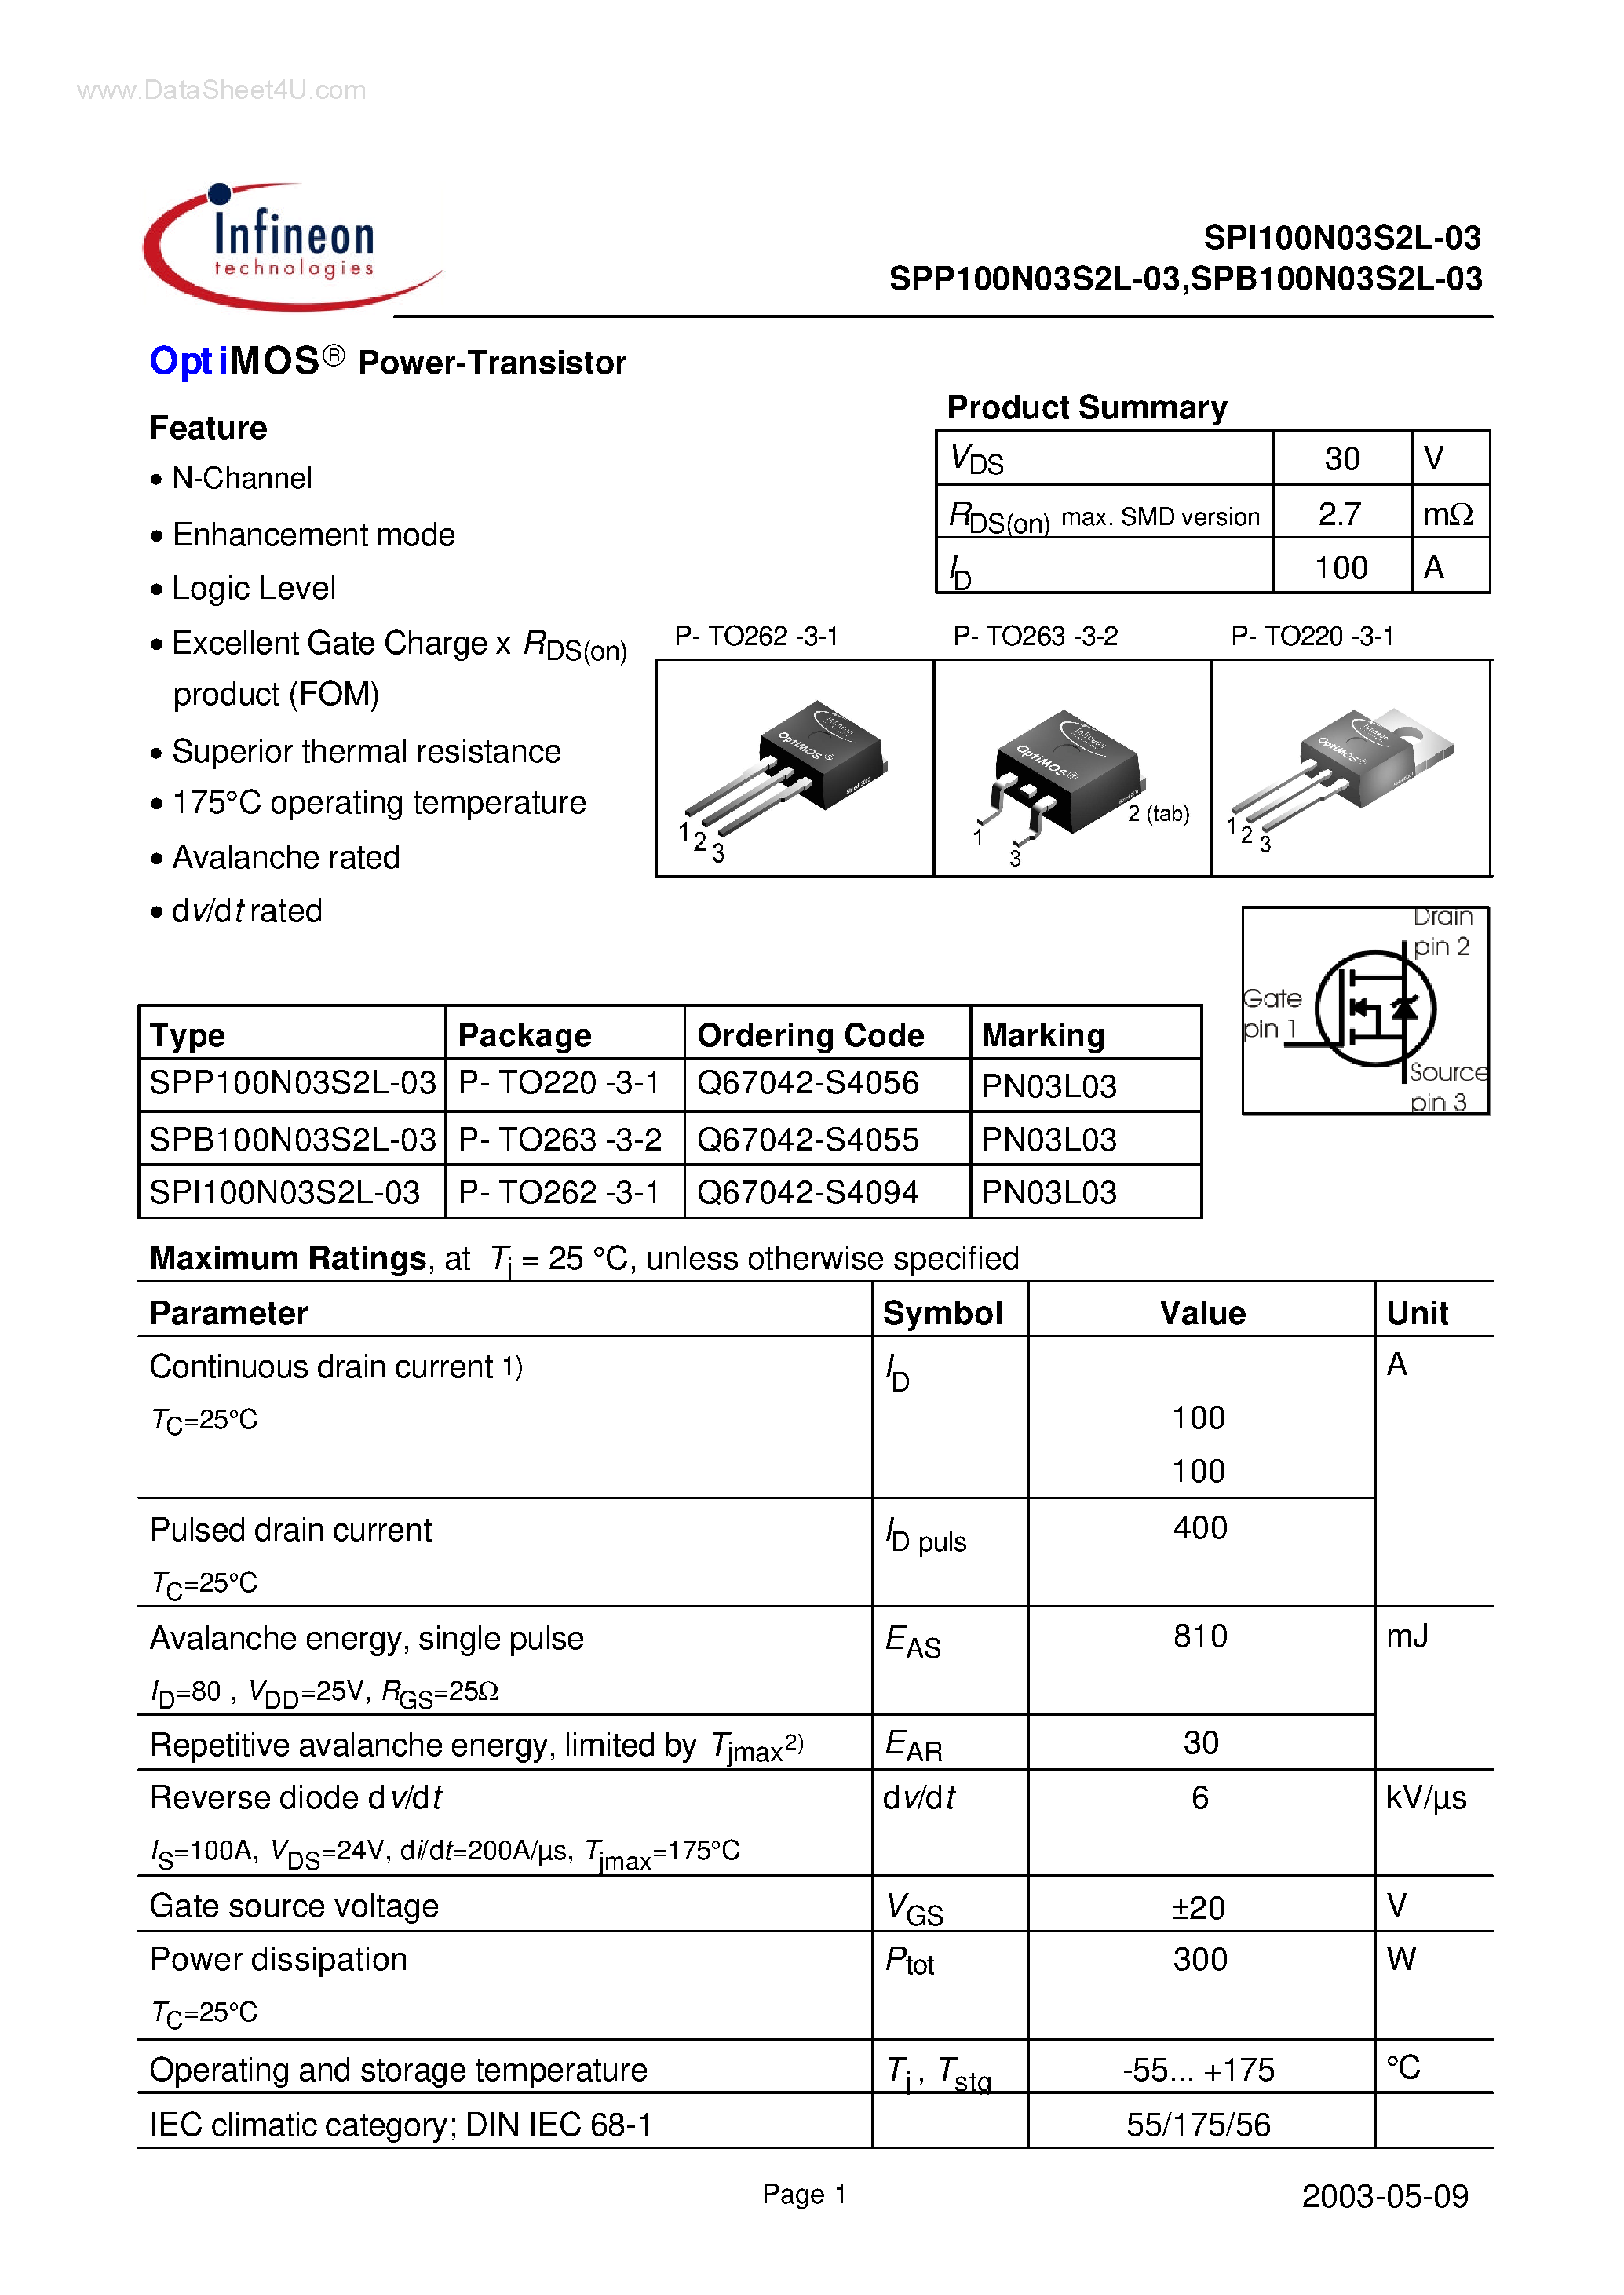 Даташит SPI100N03S2L-03 - OptiMOS Power-Transistor страница 1